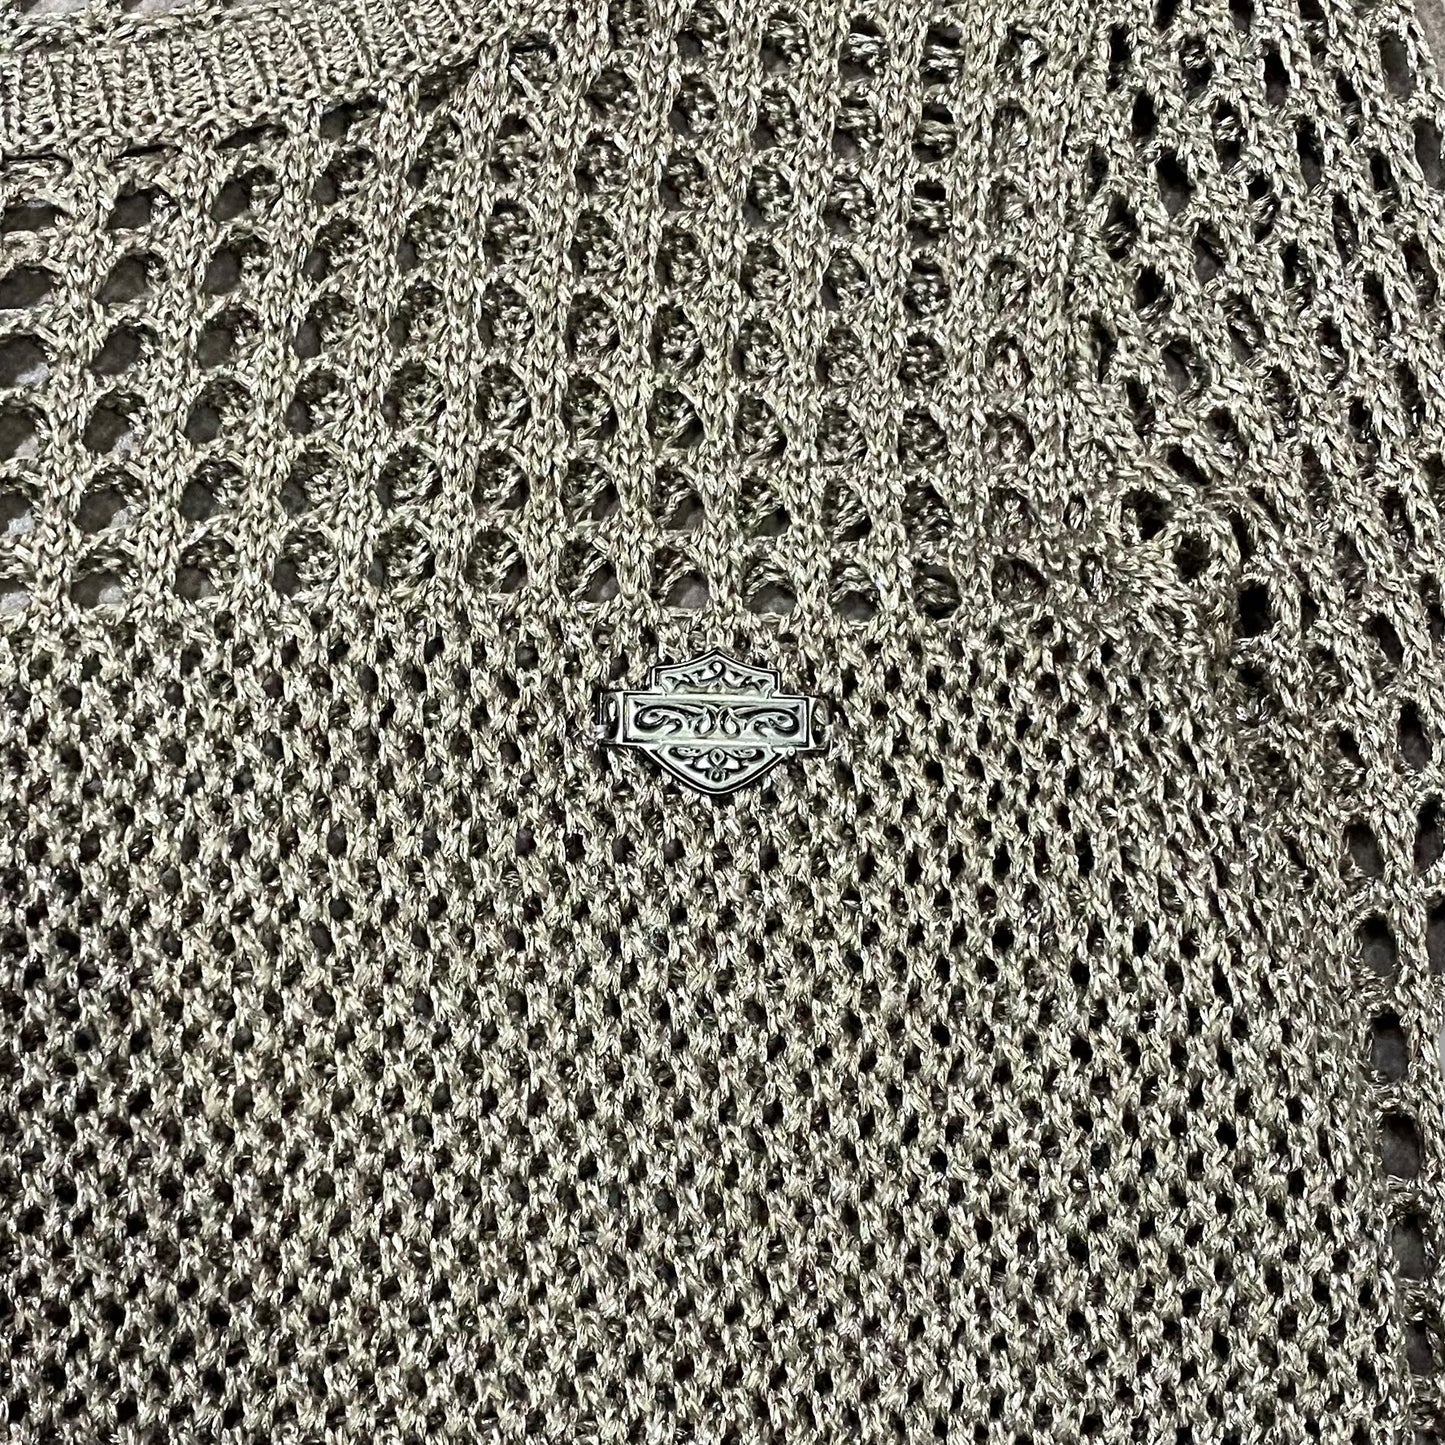 "Harley-Davidson" Mesh knit sweater